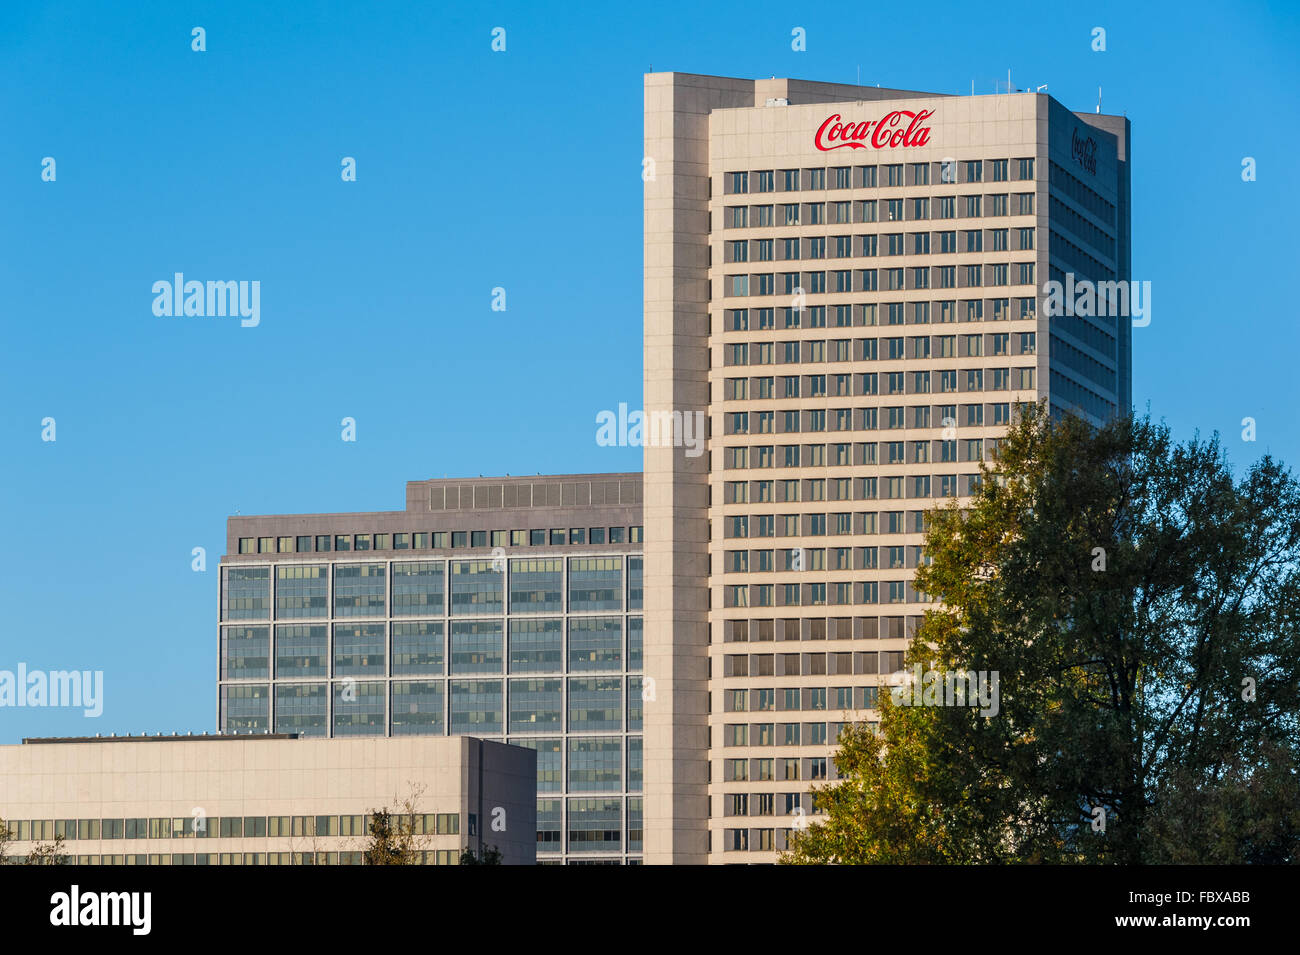 Coca-Cola international headquarters building in Atlanta, Georgia, USA. Stock Photo